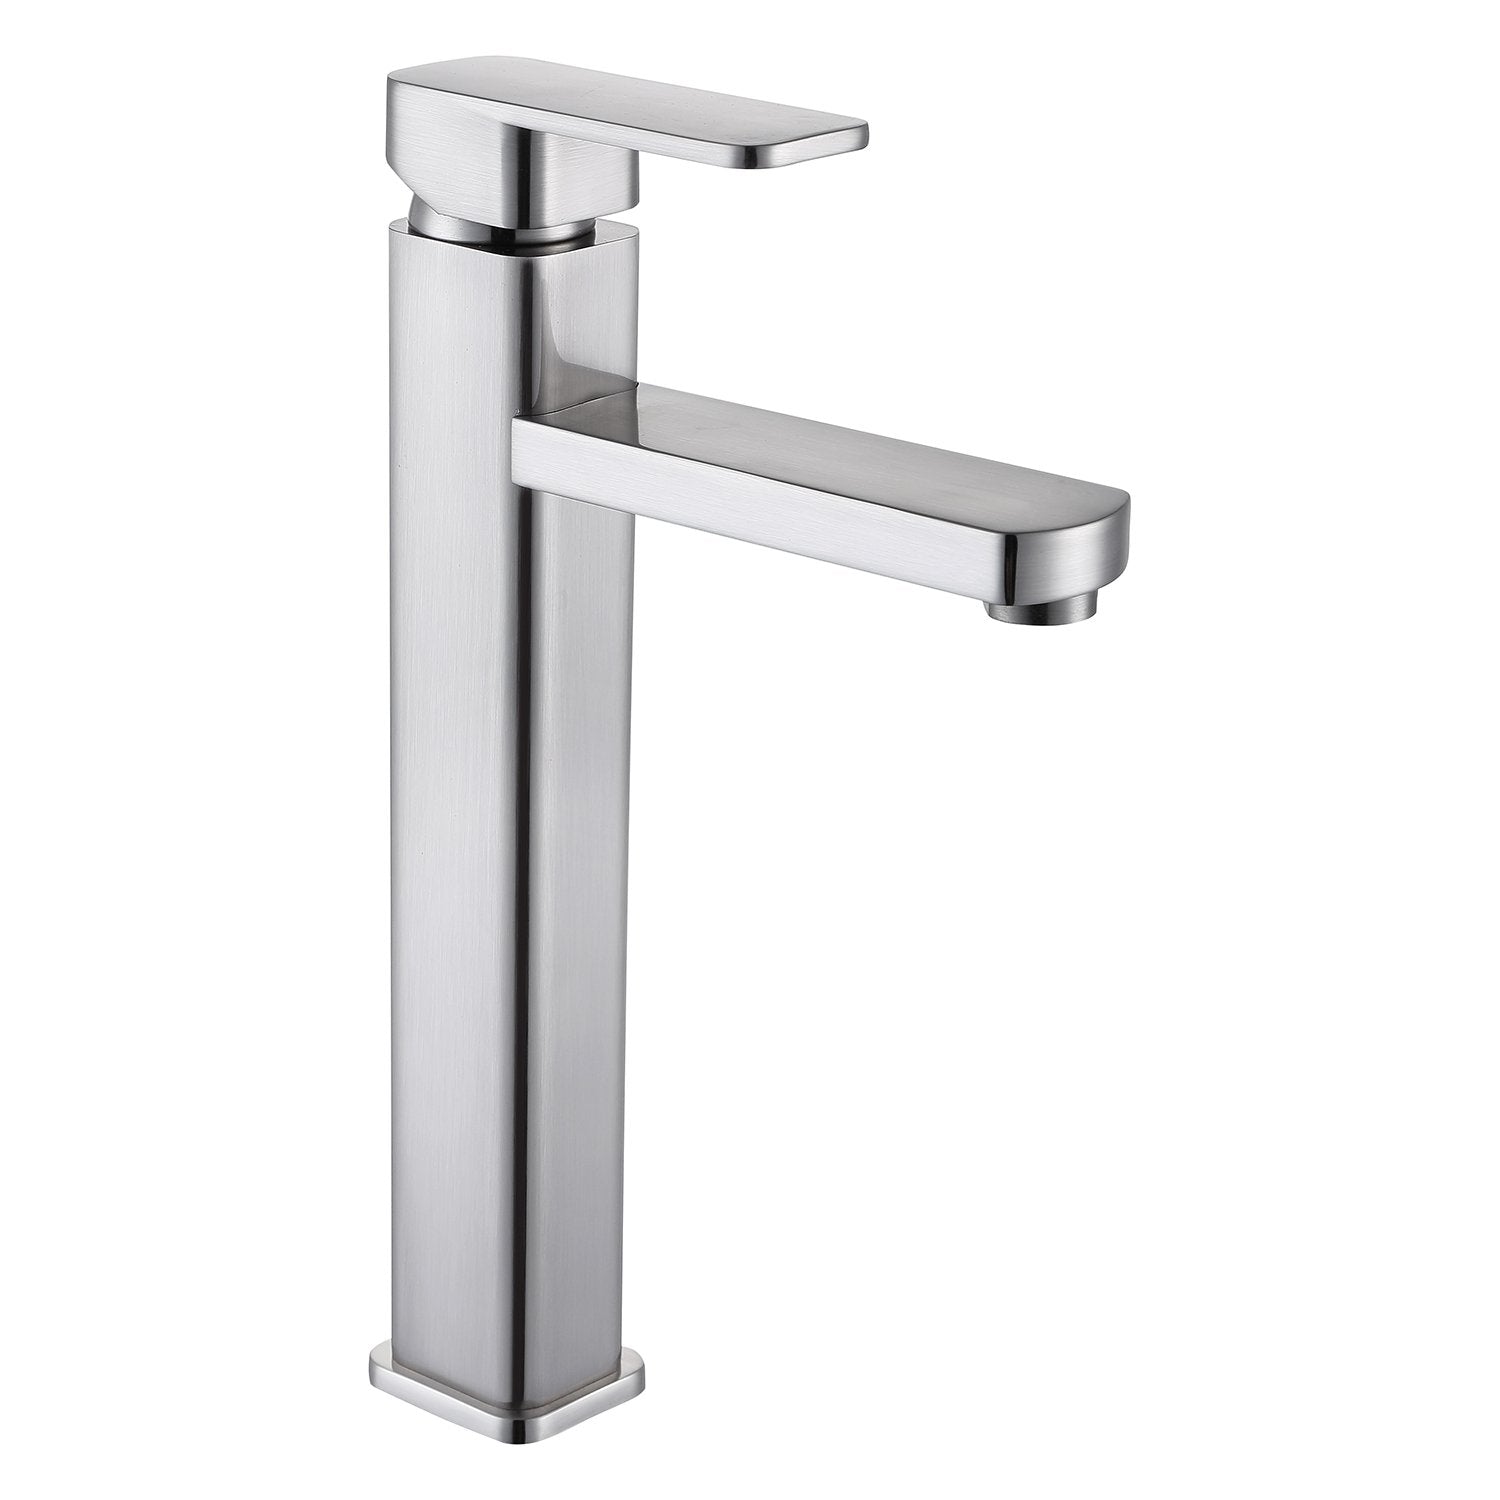 DAX Single Handle Vessel Sink Bathroom Faucet, Brass Body, Brushed Nickel Finish, 6 x 12 Inches (DAX-6941B-BN)